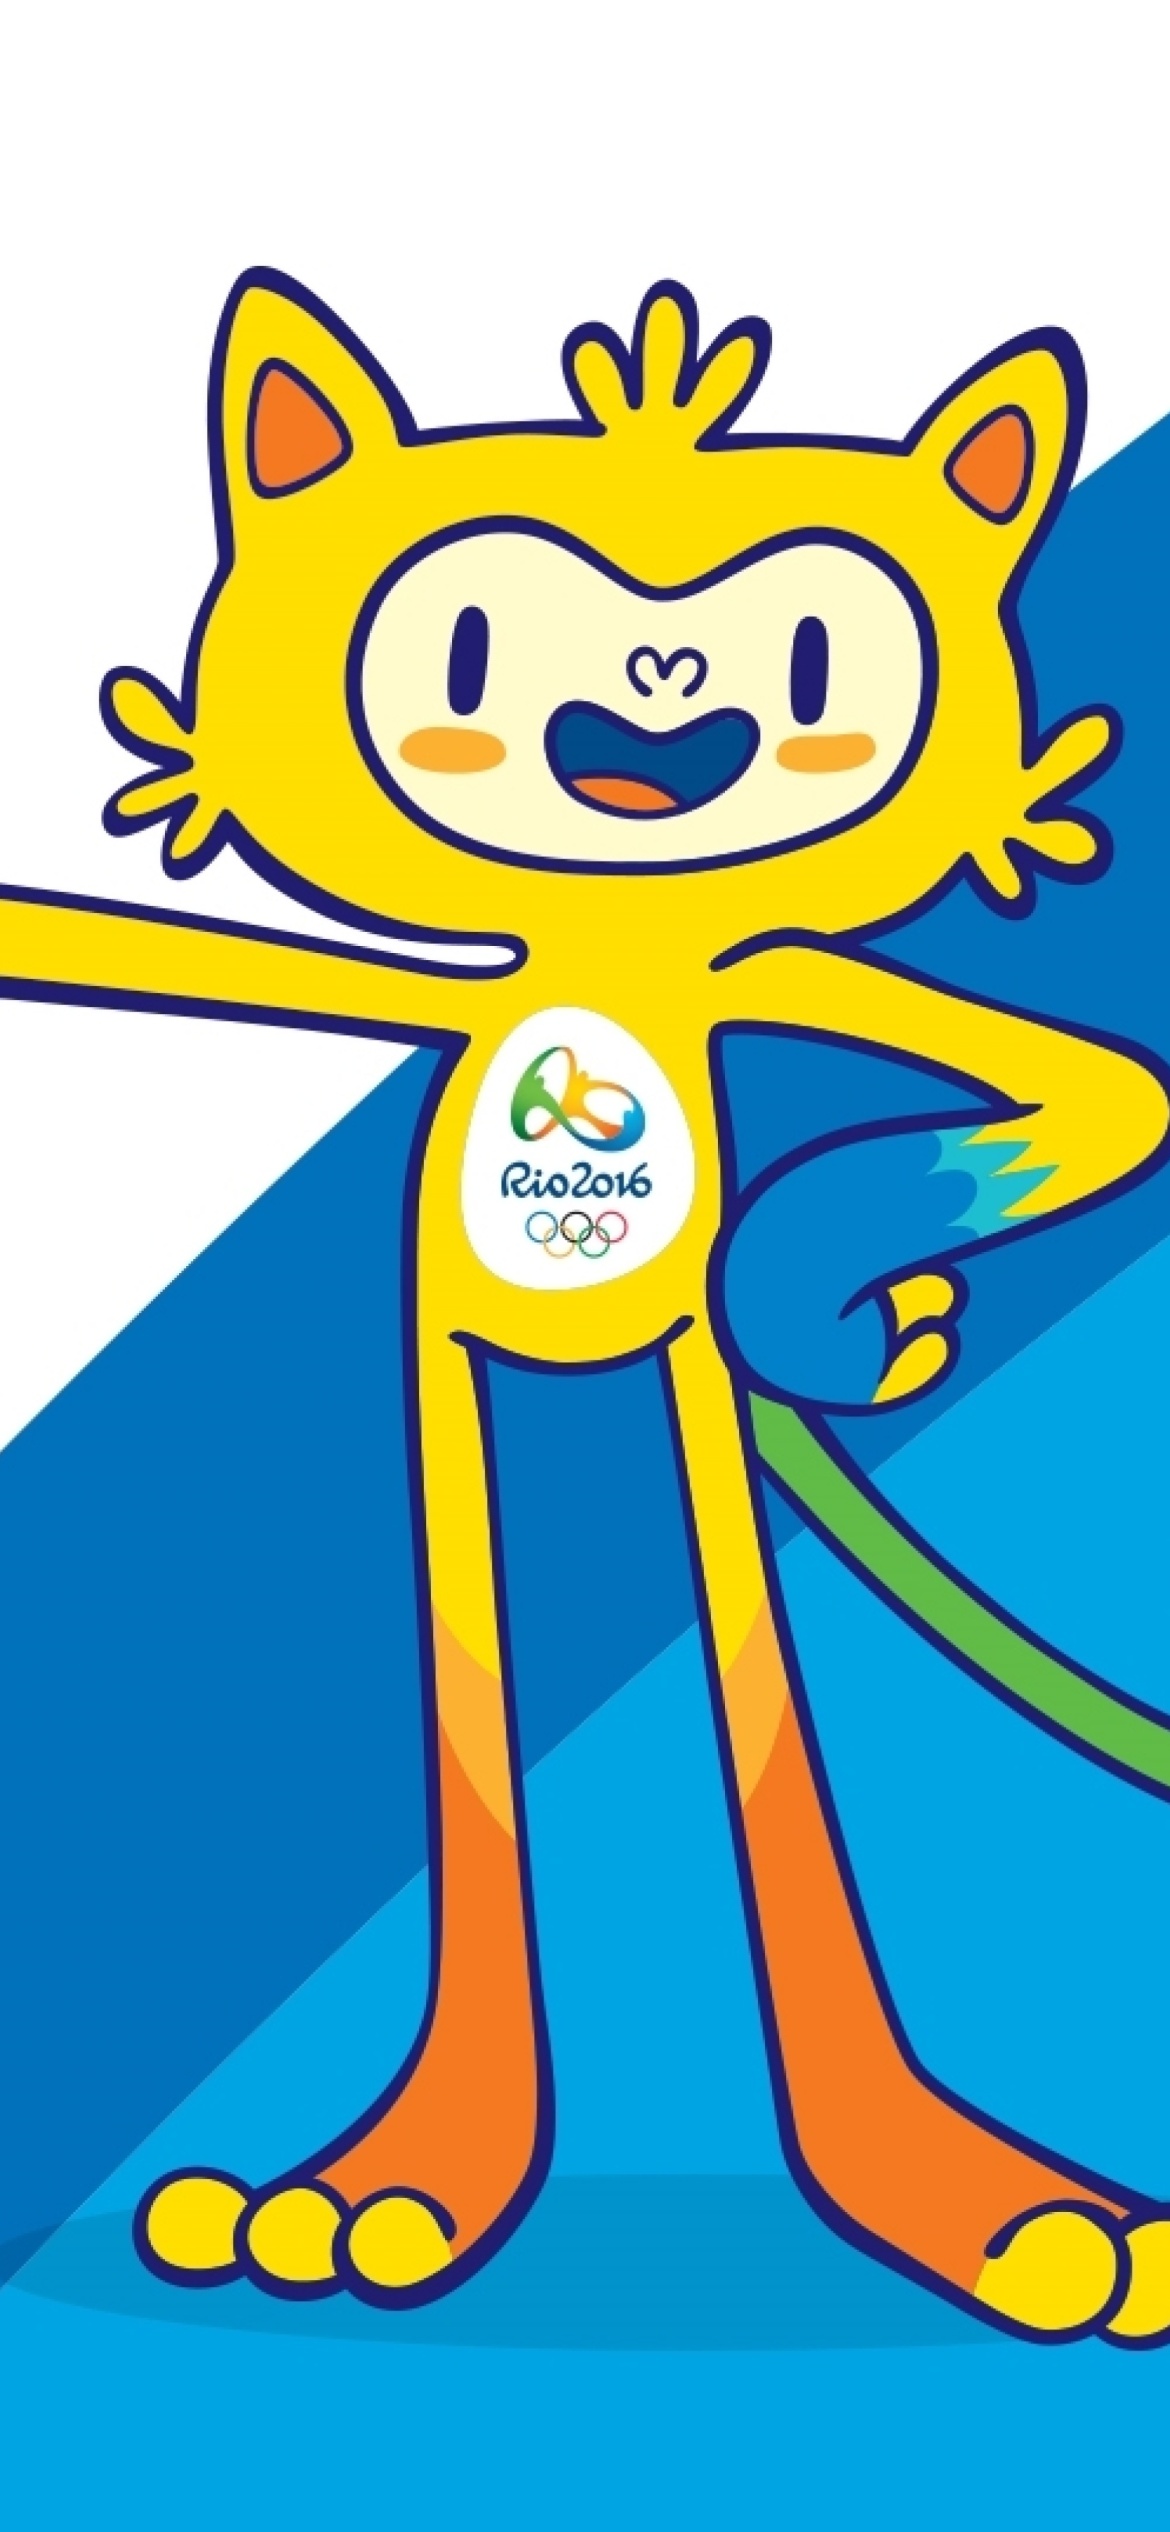 Olympics Mascot Vinicius Rio 2016 wallpaper 1170x2532